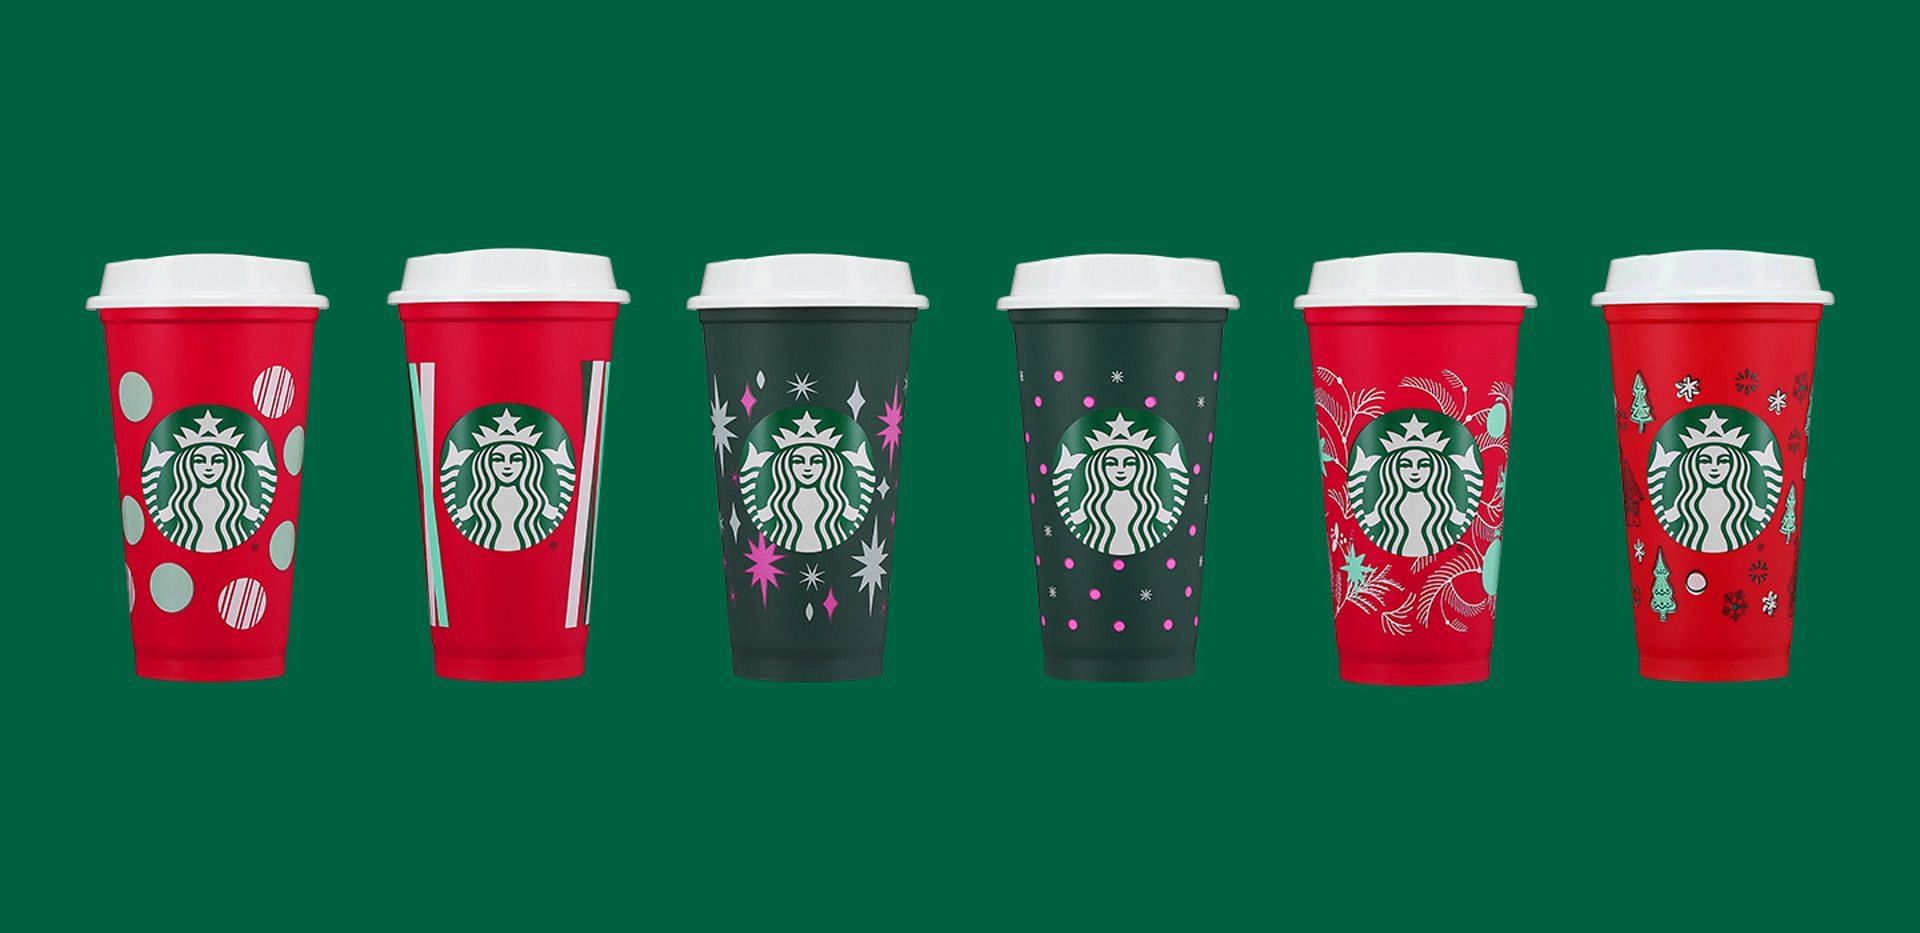 Color Changing Hot Cup Set (Image via Starbucks)